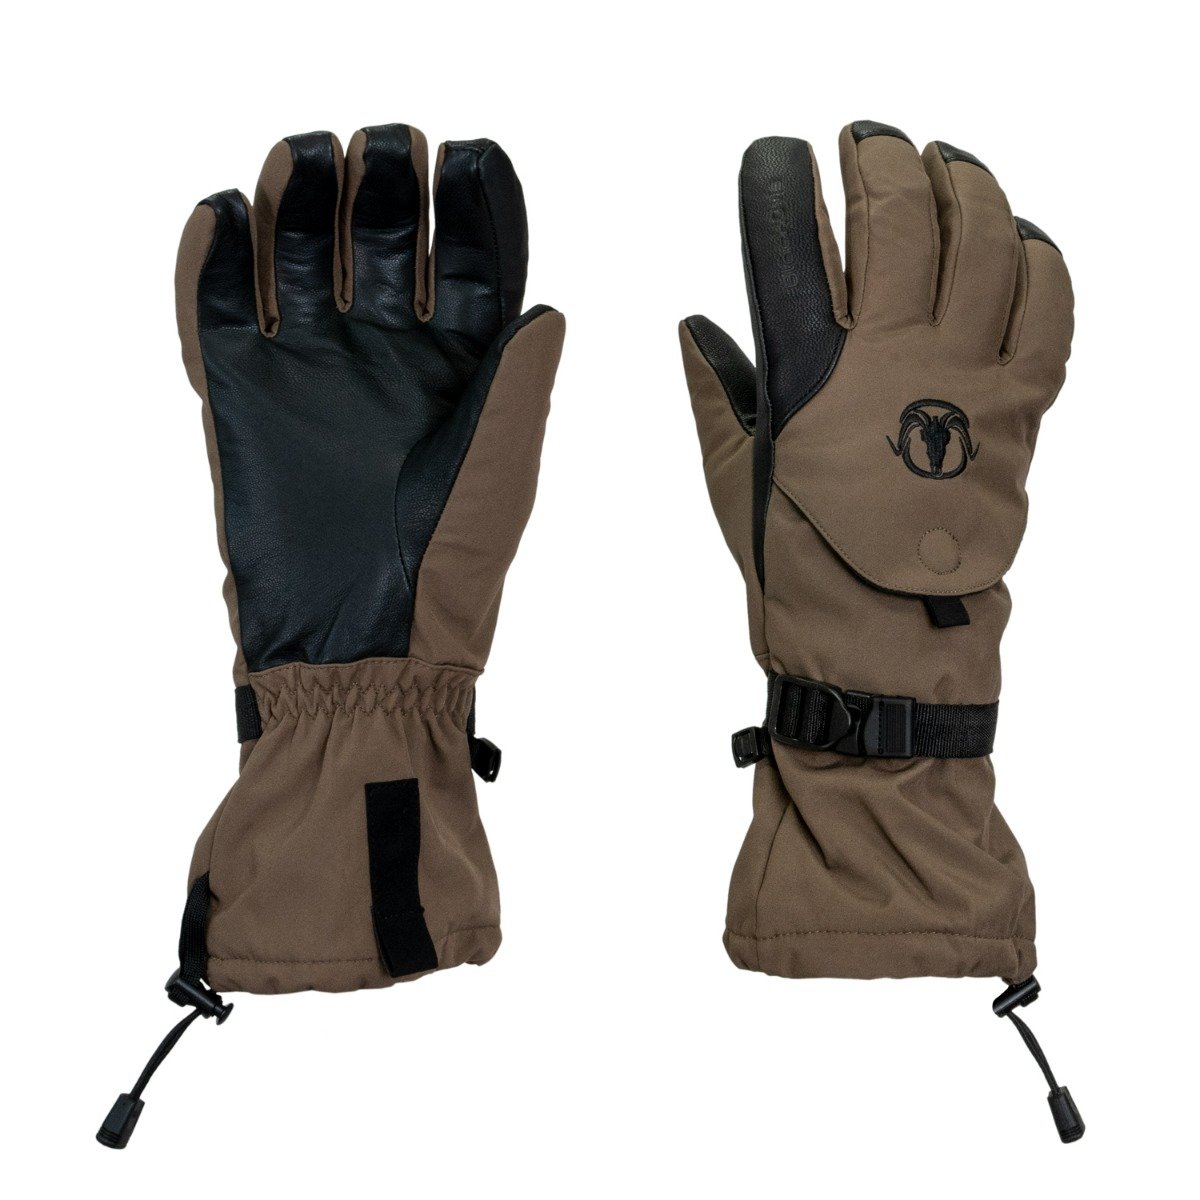 BlackOvis Taiga Softshell Waterproof Gloves